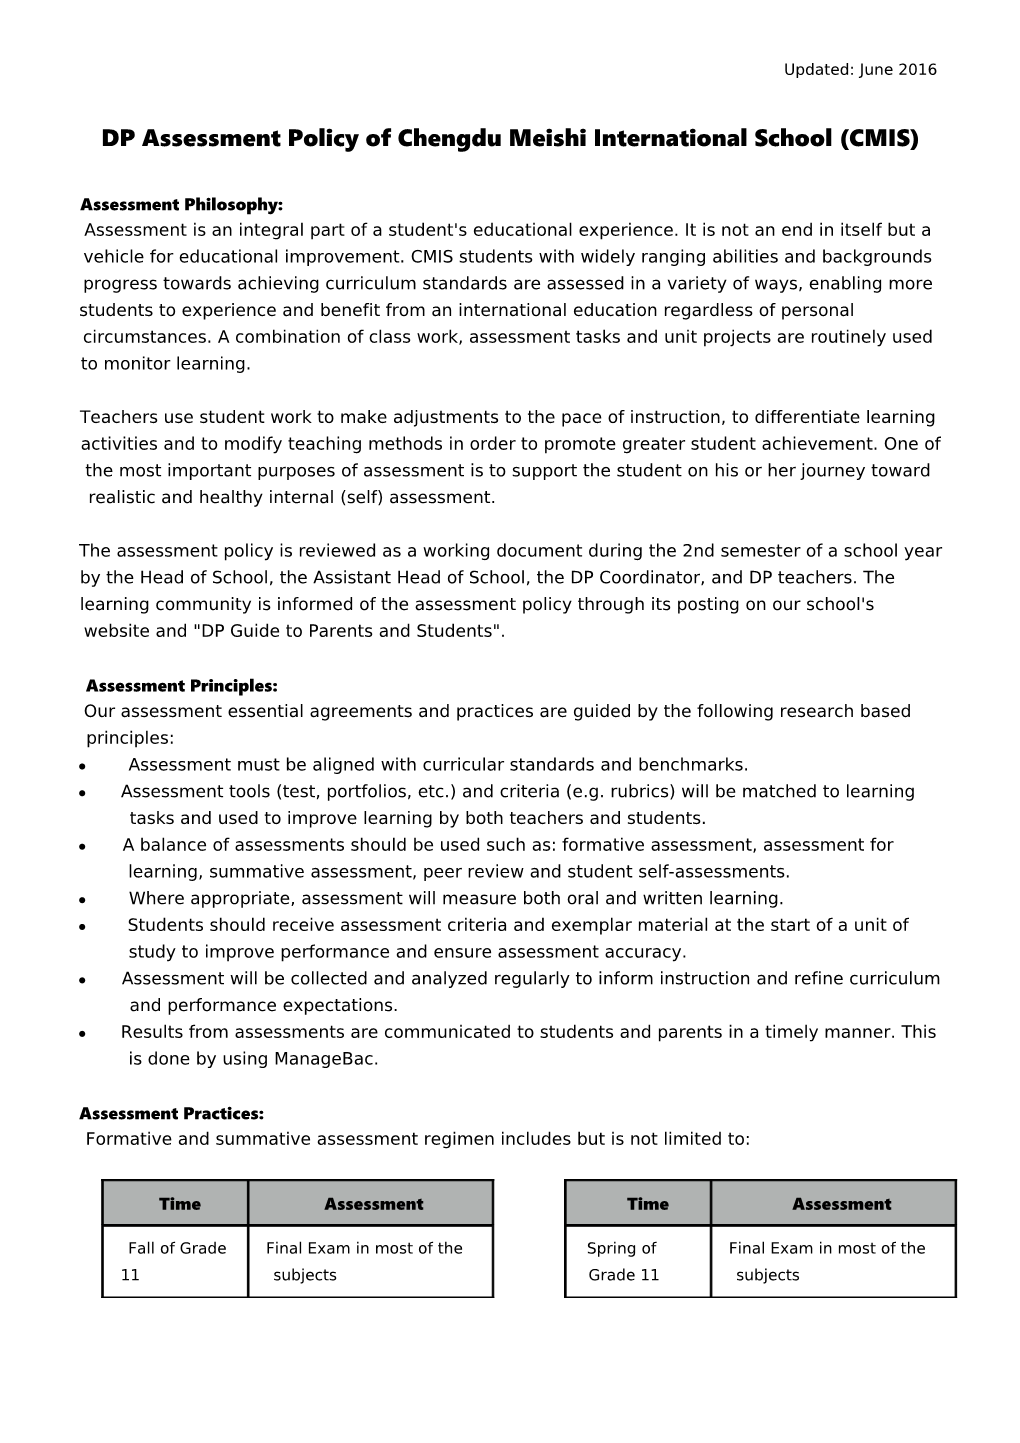 DP Assessment Policy of Chengdu Meishi International School (CMIS)